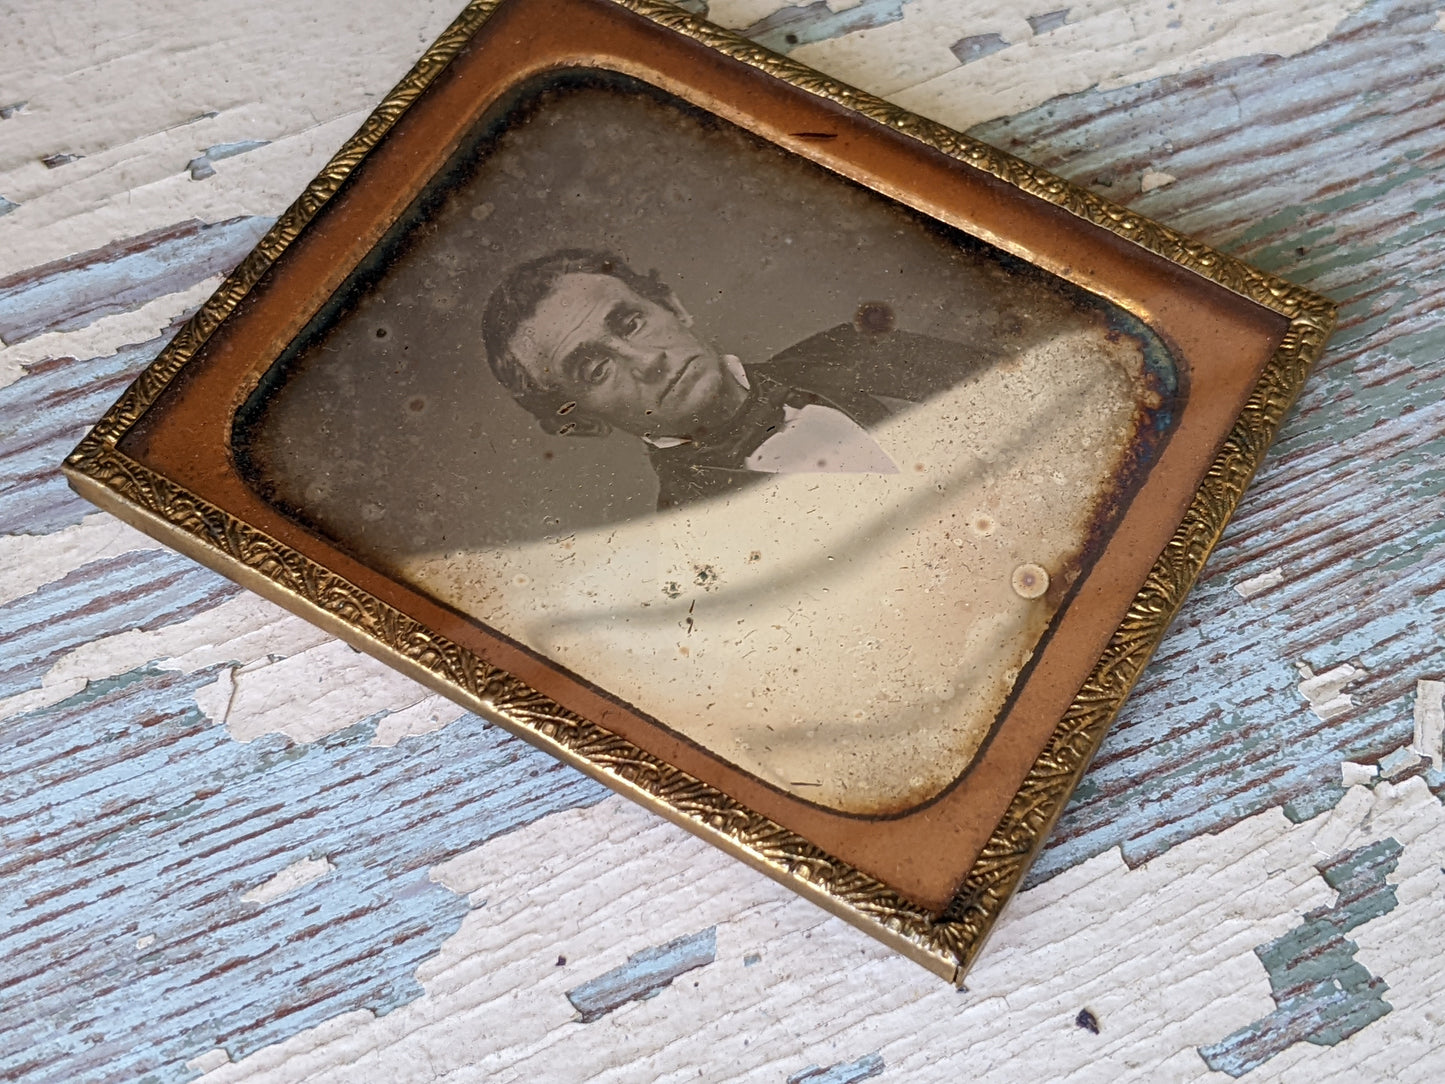 1850s Daguerreotype Interesting Mans Portrait Amazing Facial Character !! Victorian Vintage Gifts !!